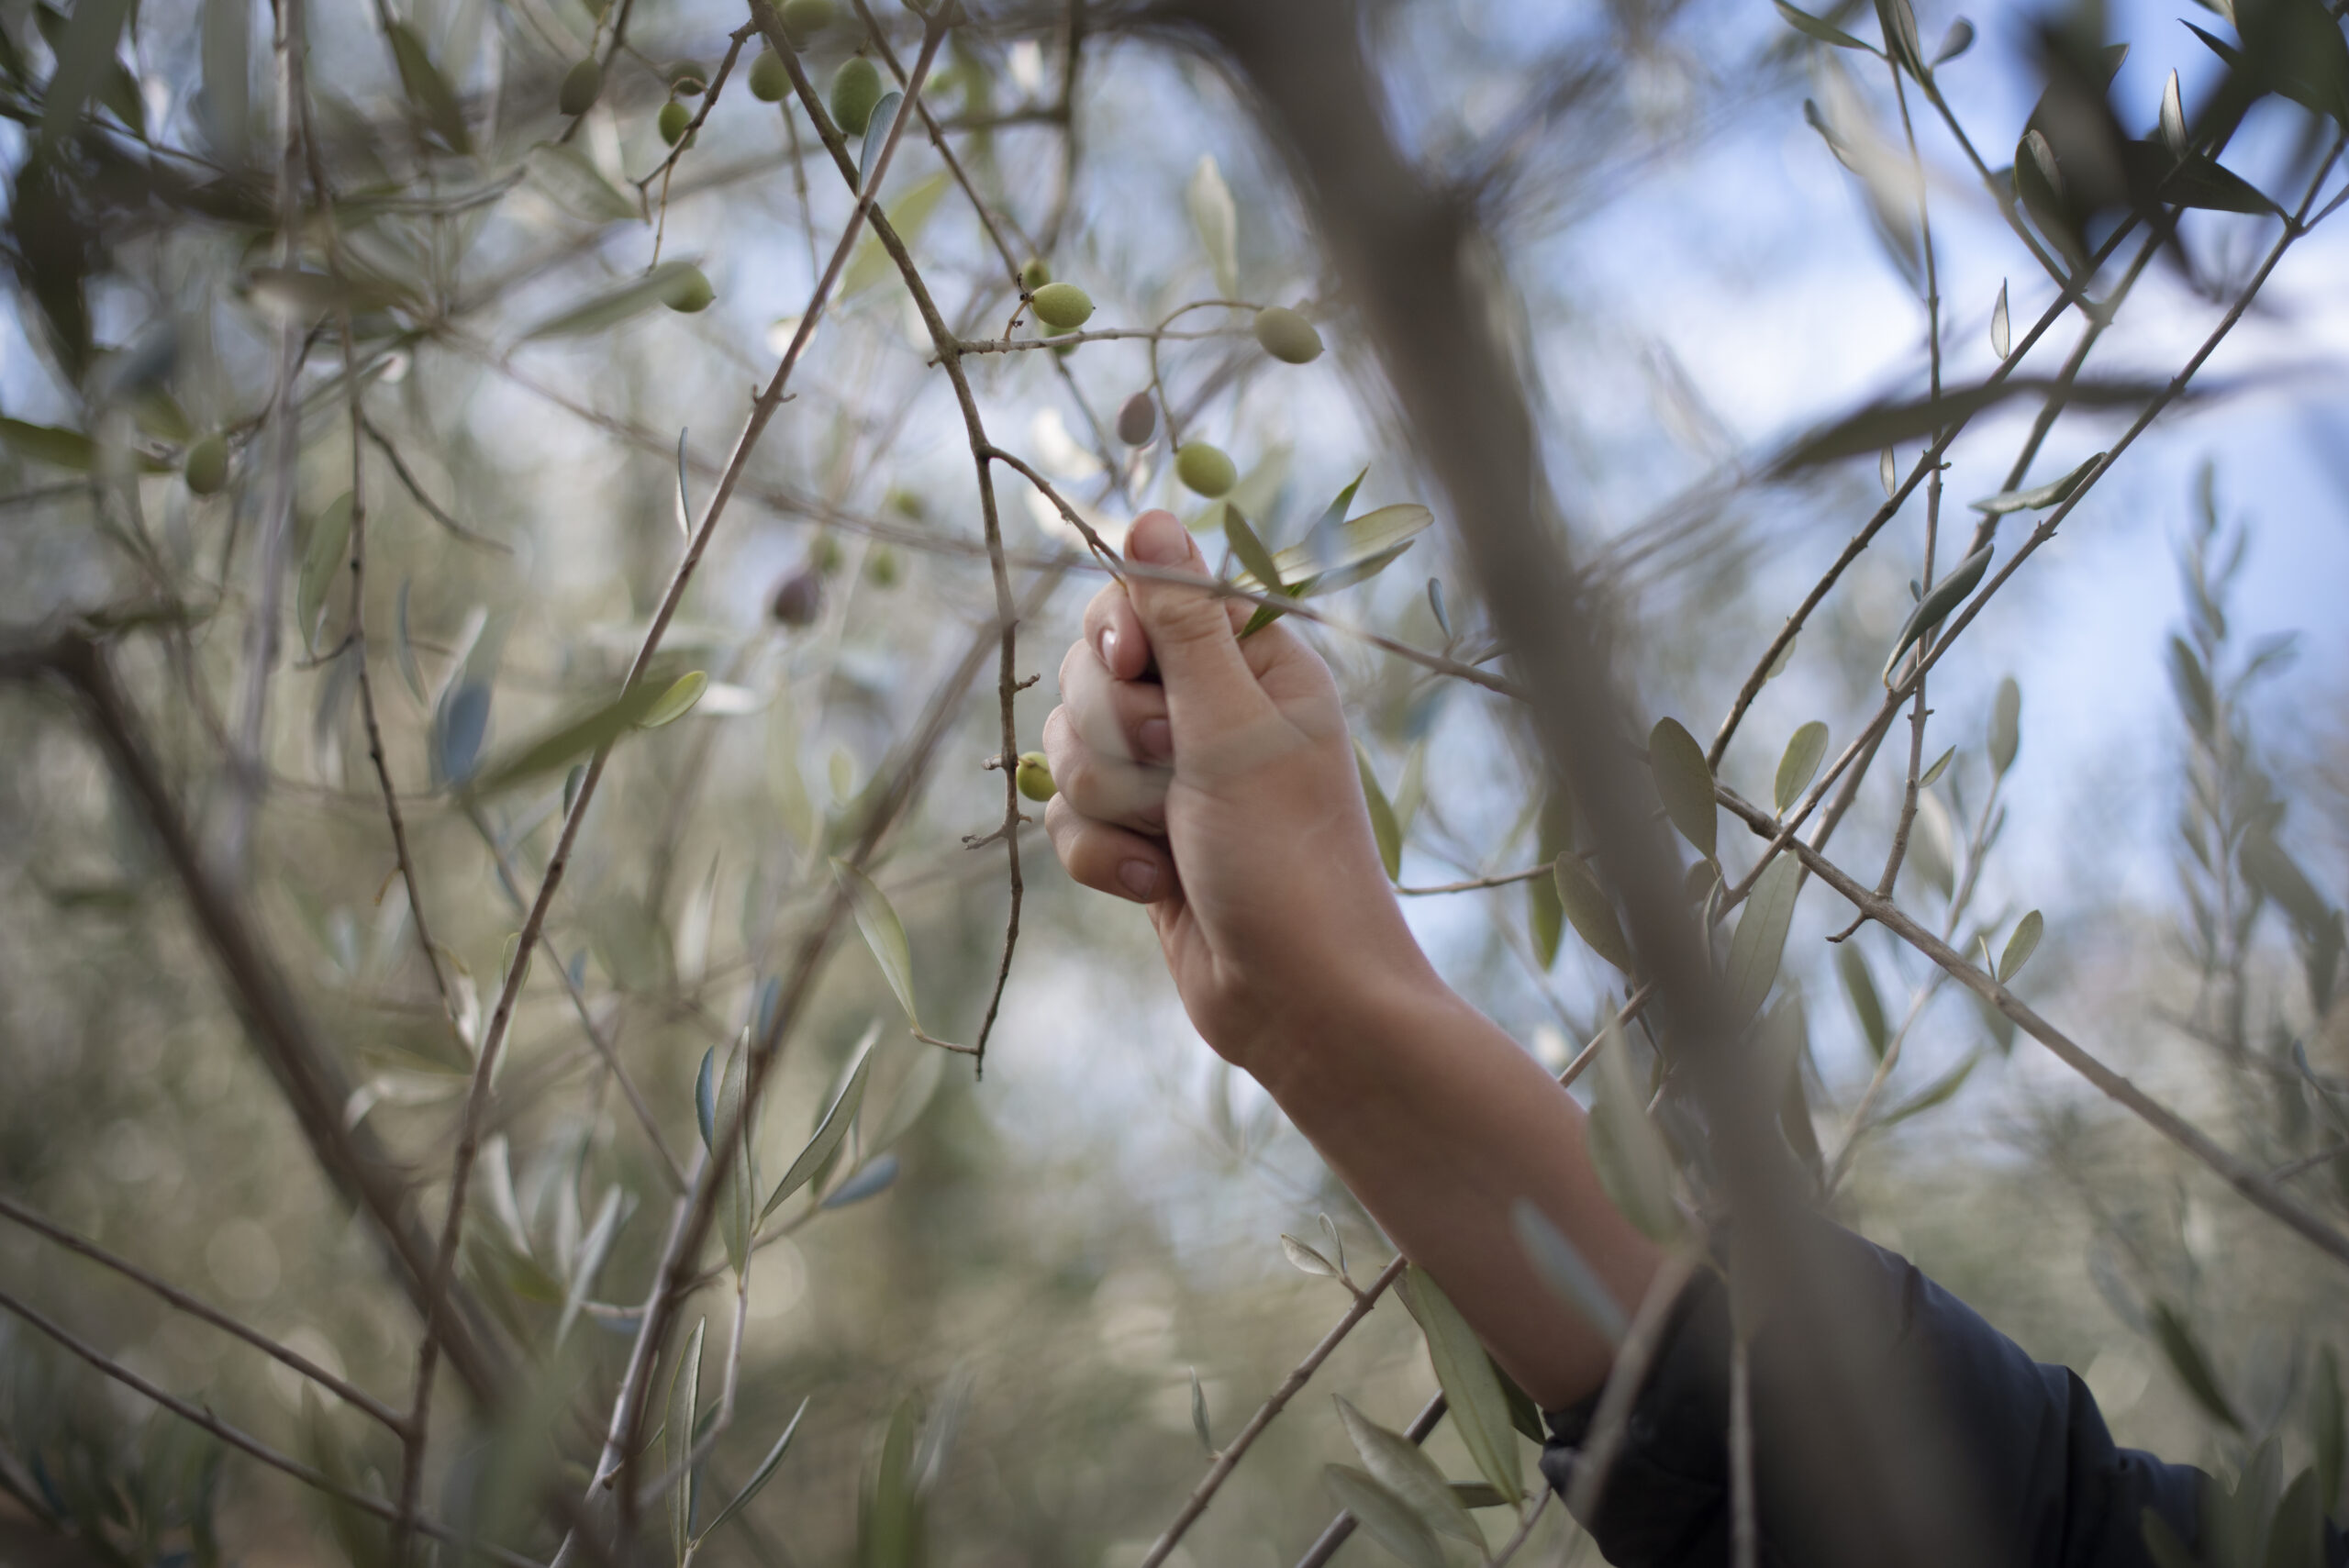 The hand of a young boy, Ruben Howell, 11, picking olives during olive harvest at Baker Lane Vineyards in Sebastopol, California, November 8, 2018. (Photo: Erik Castro/for Sonoma Magazine)